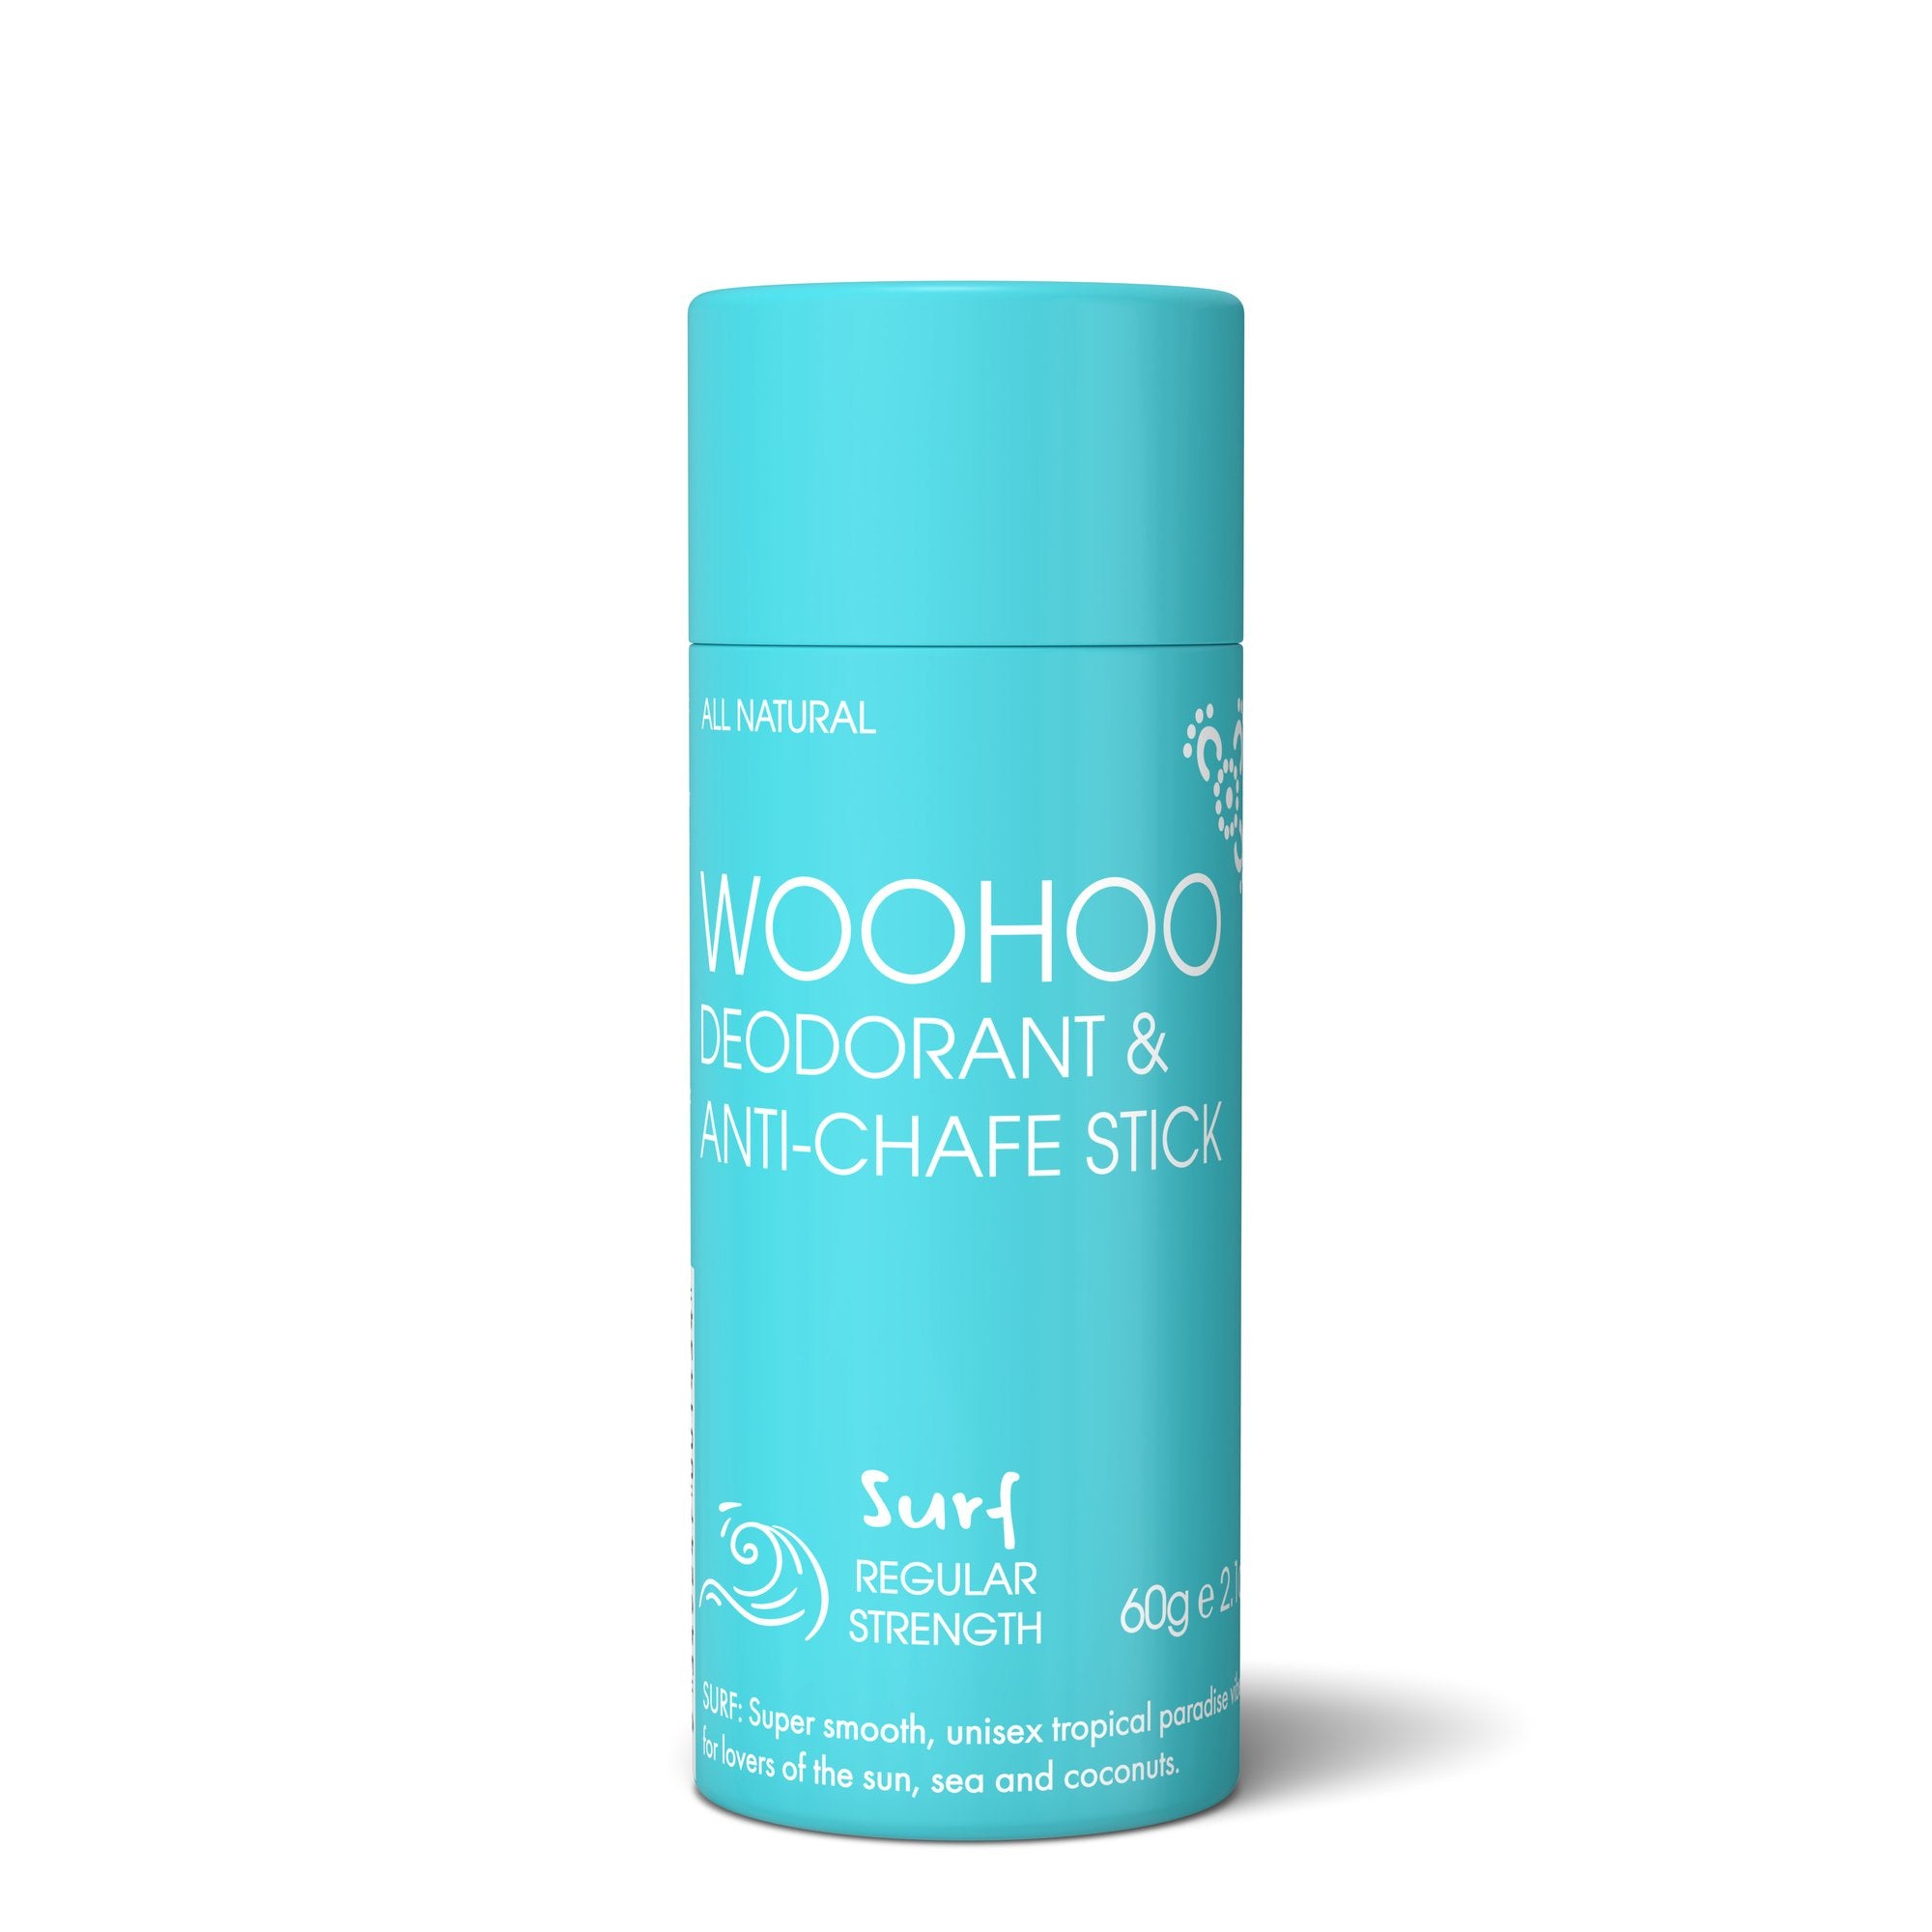 Woohoo Deodorant & Anti-Chafe Stick (Surf) 60g